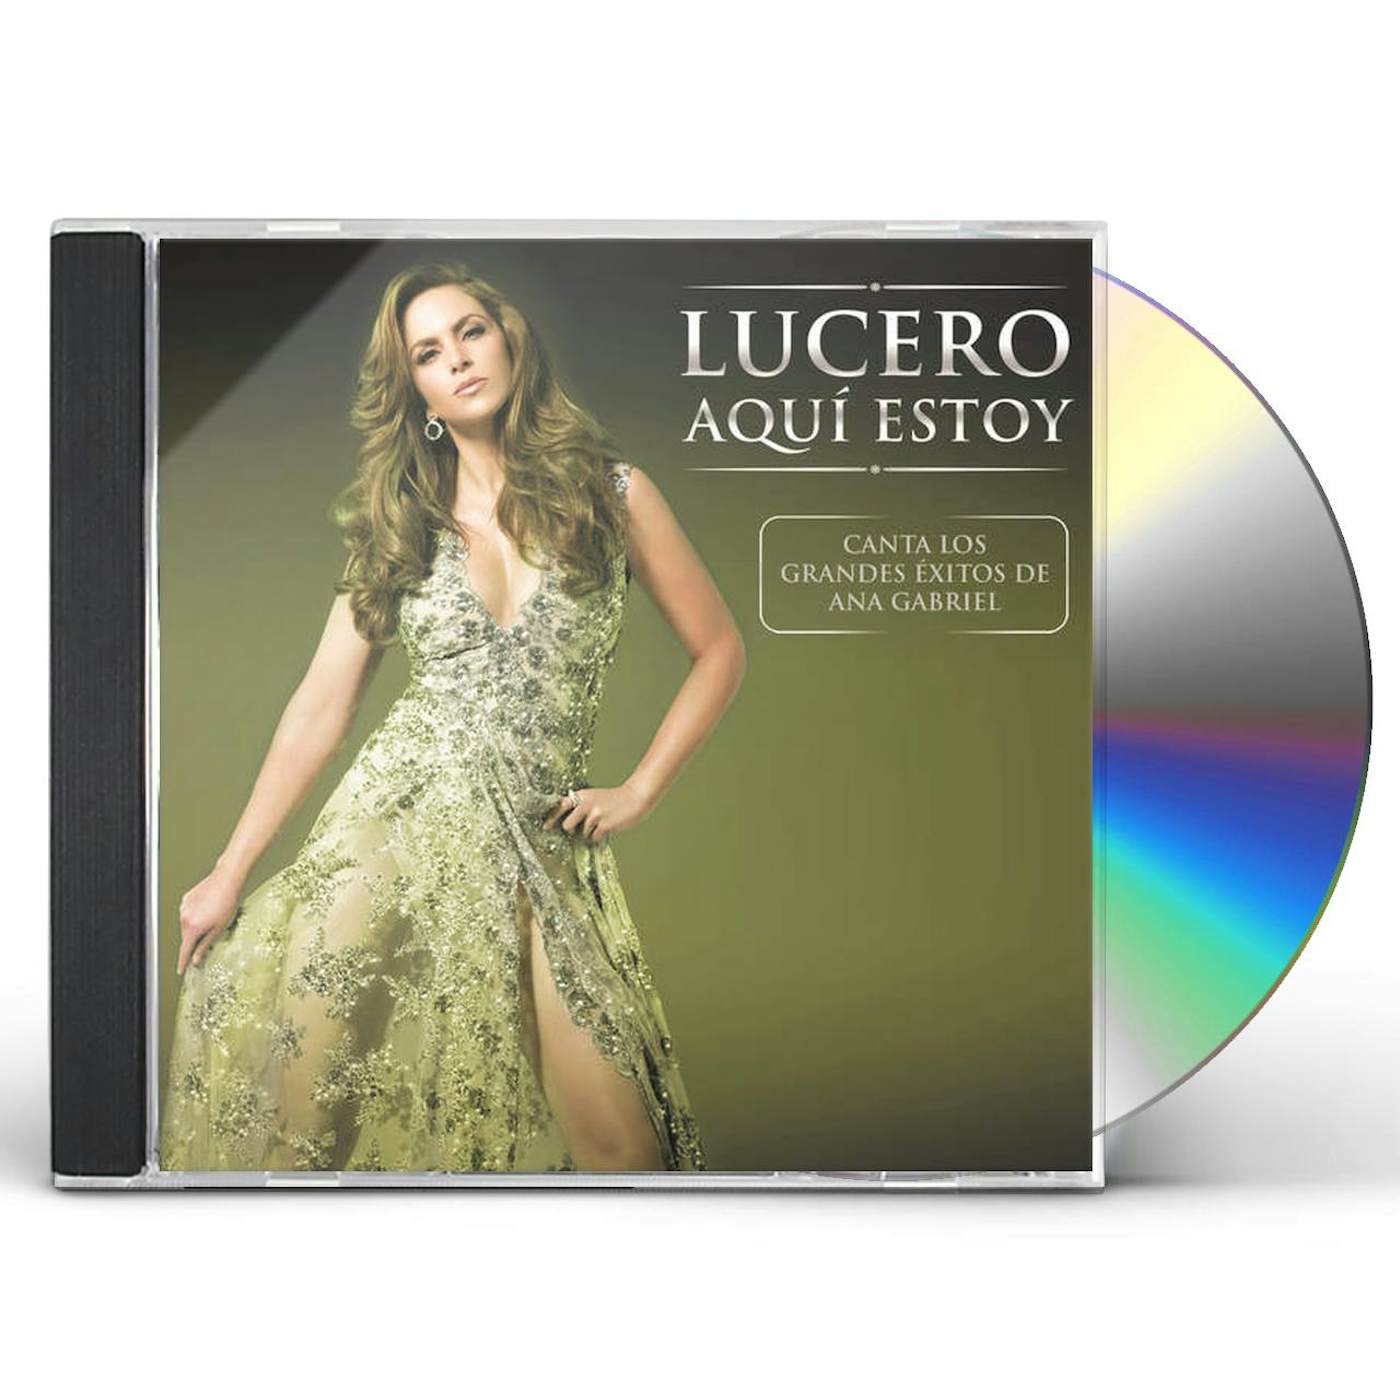 Lucero AQUI ESTOY CD